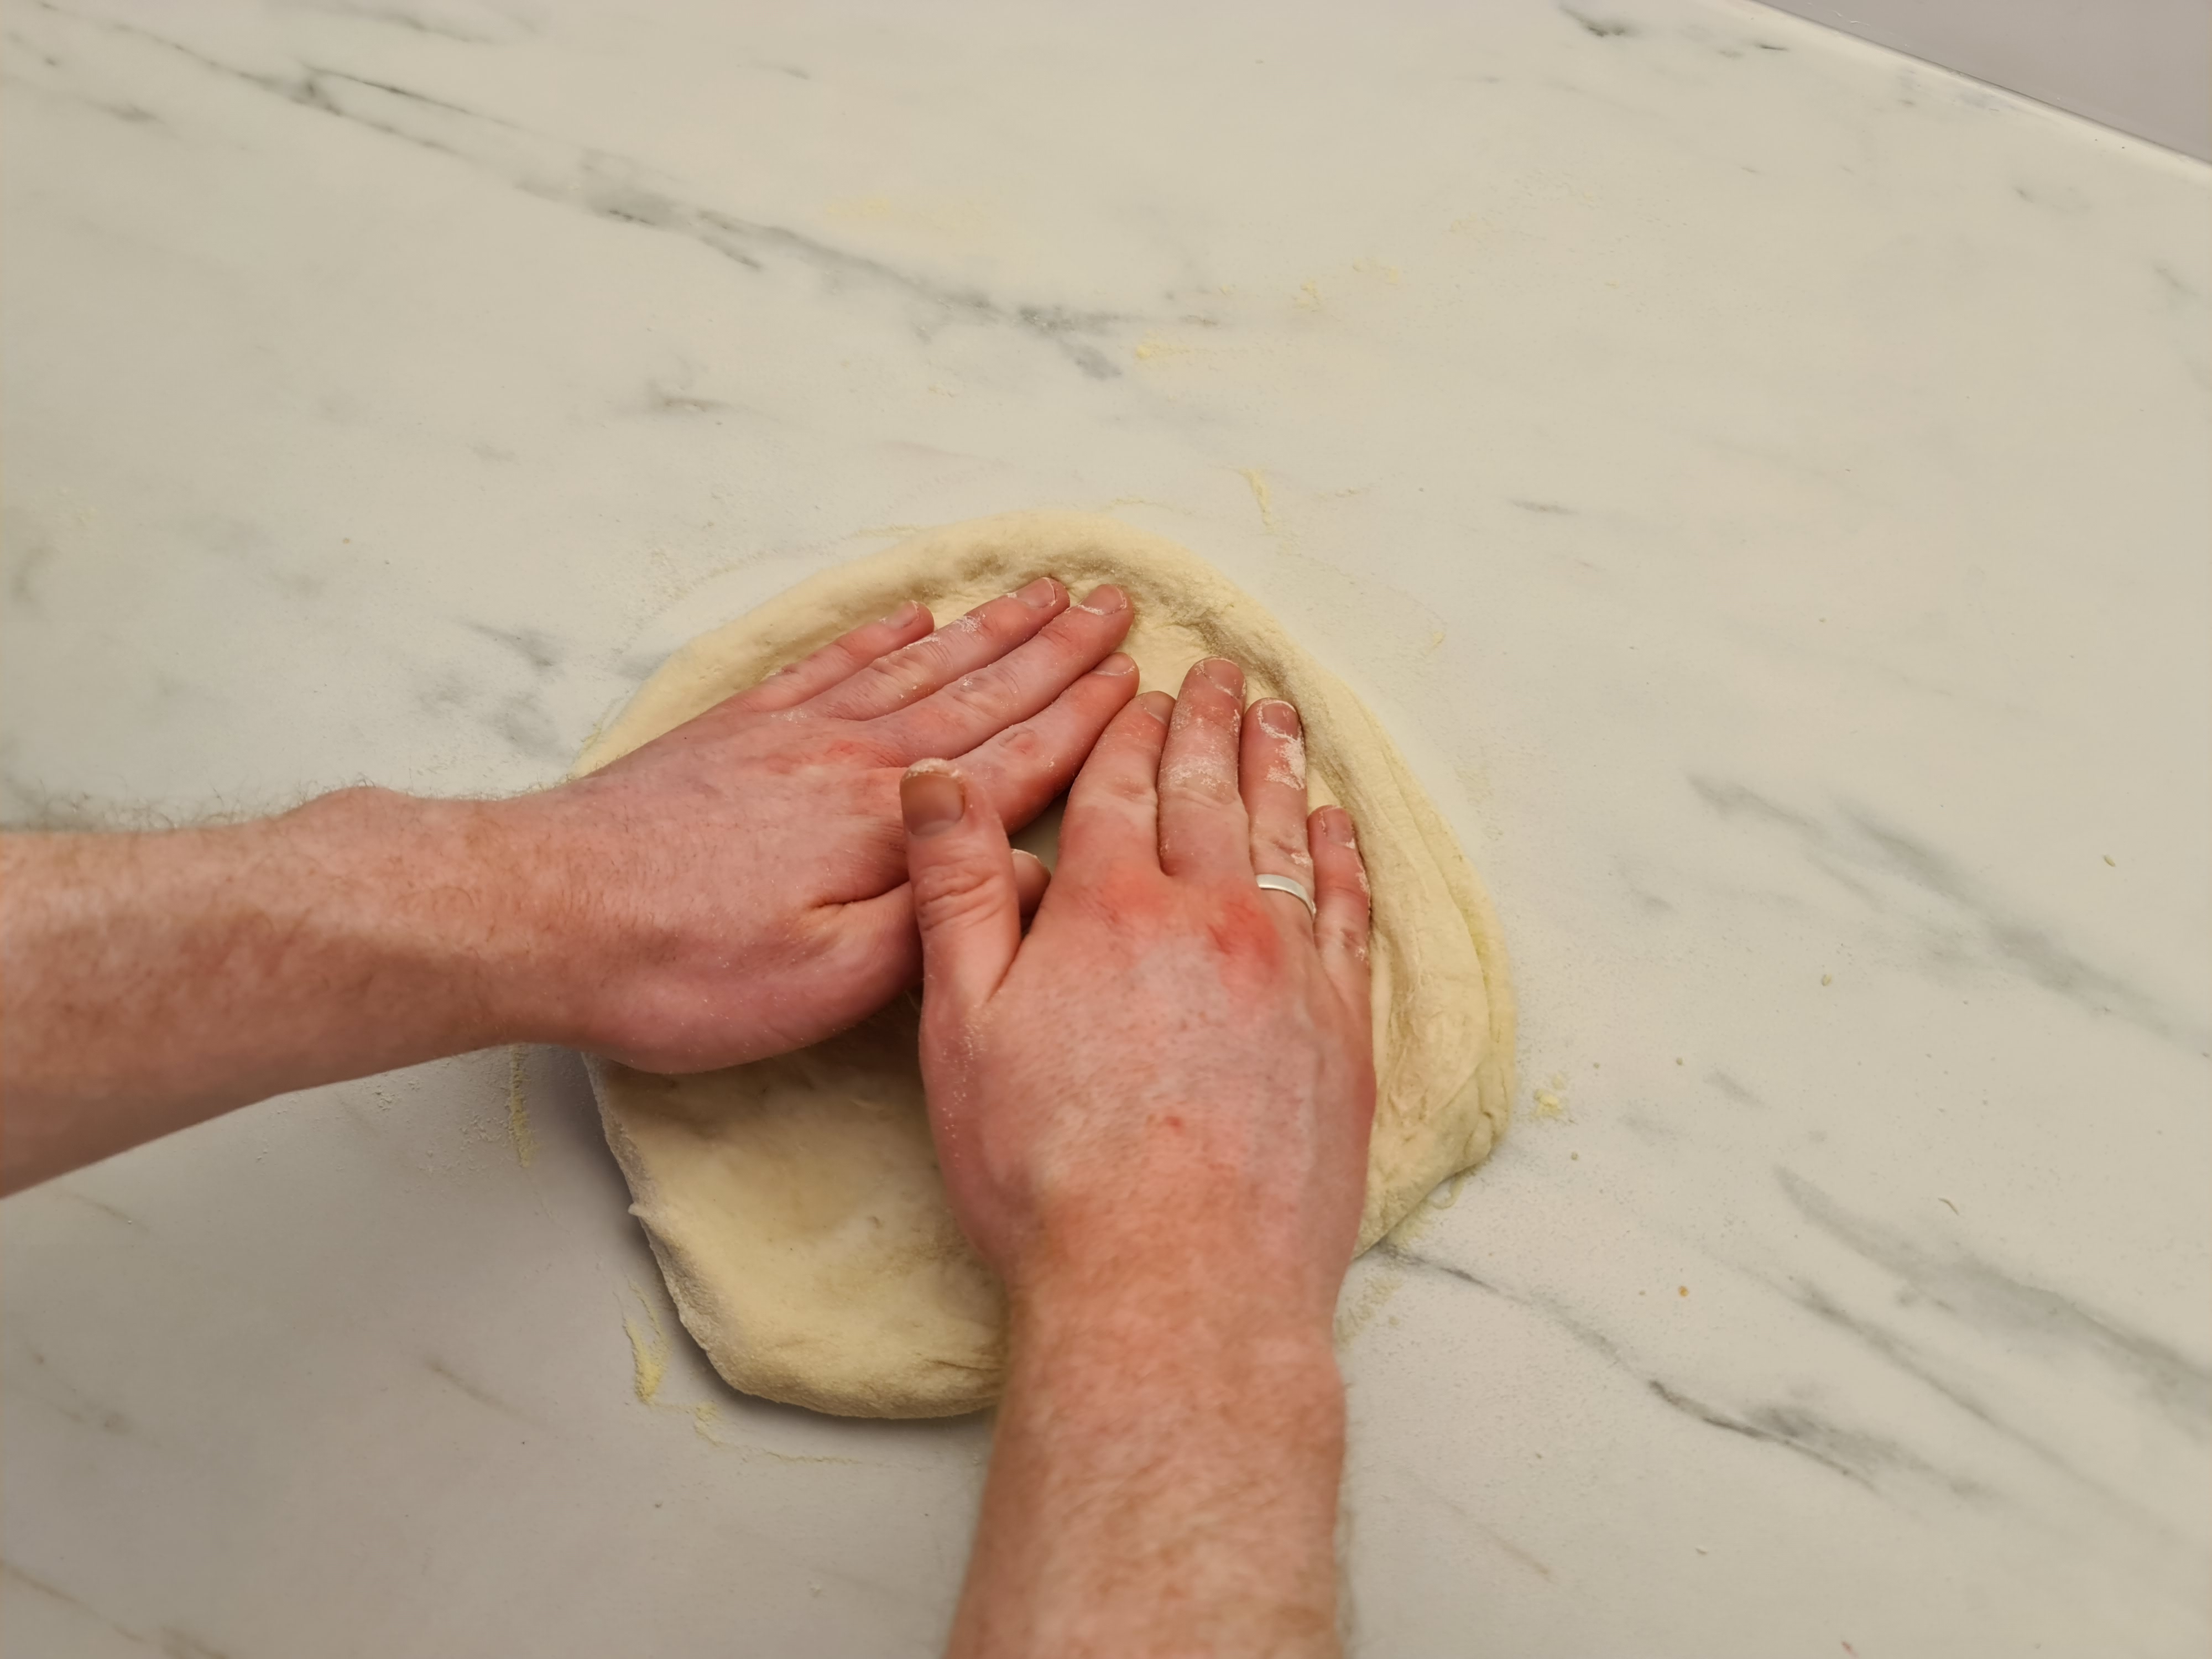 Stretching pizza dough